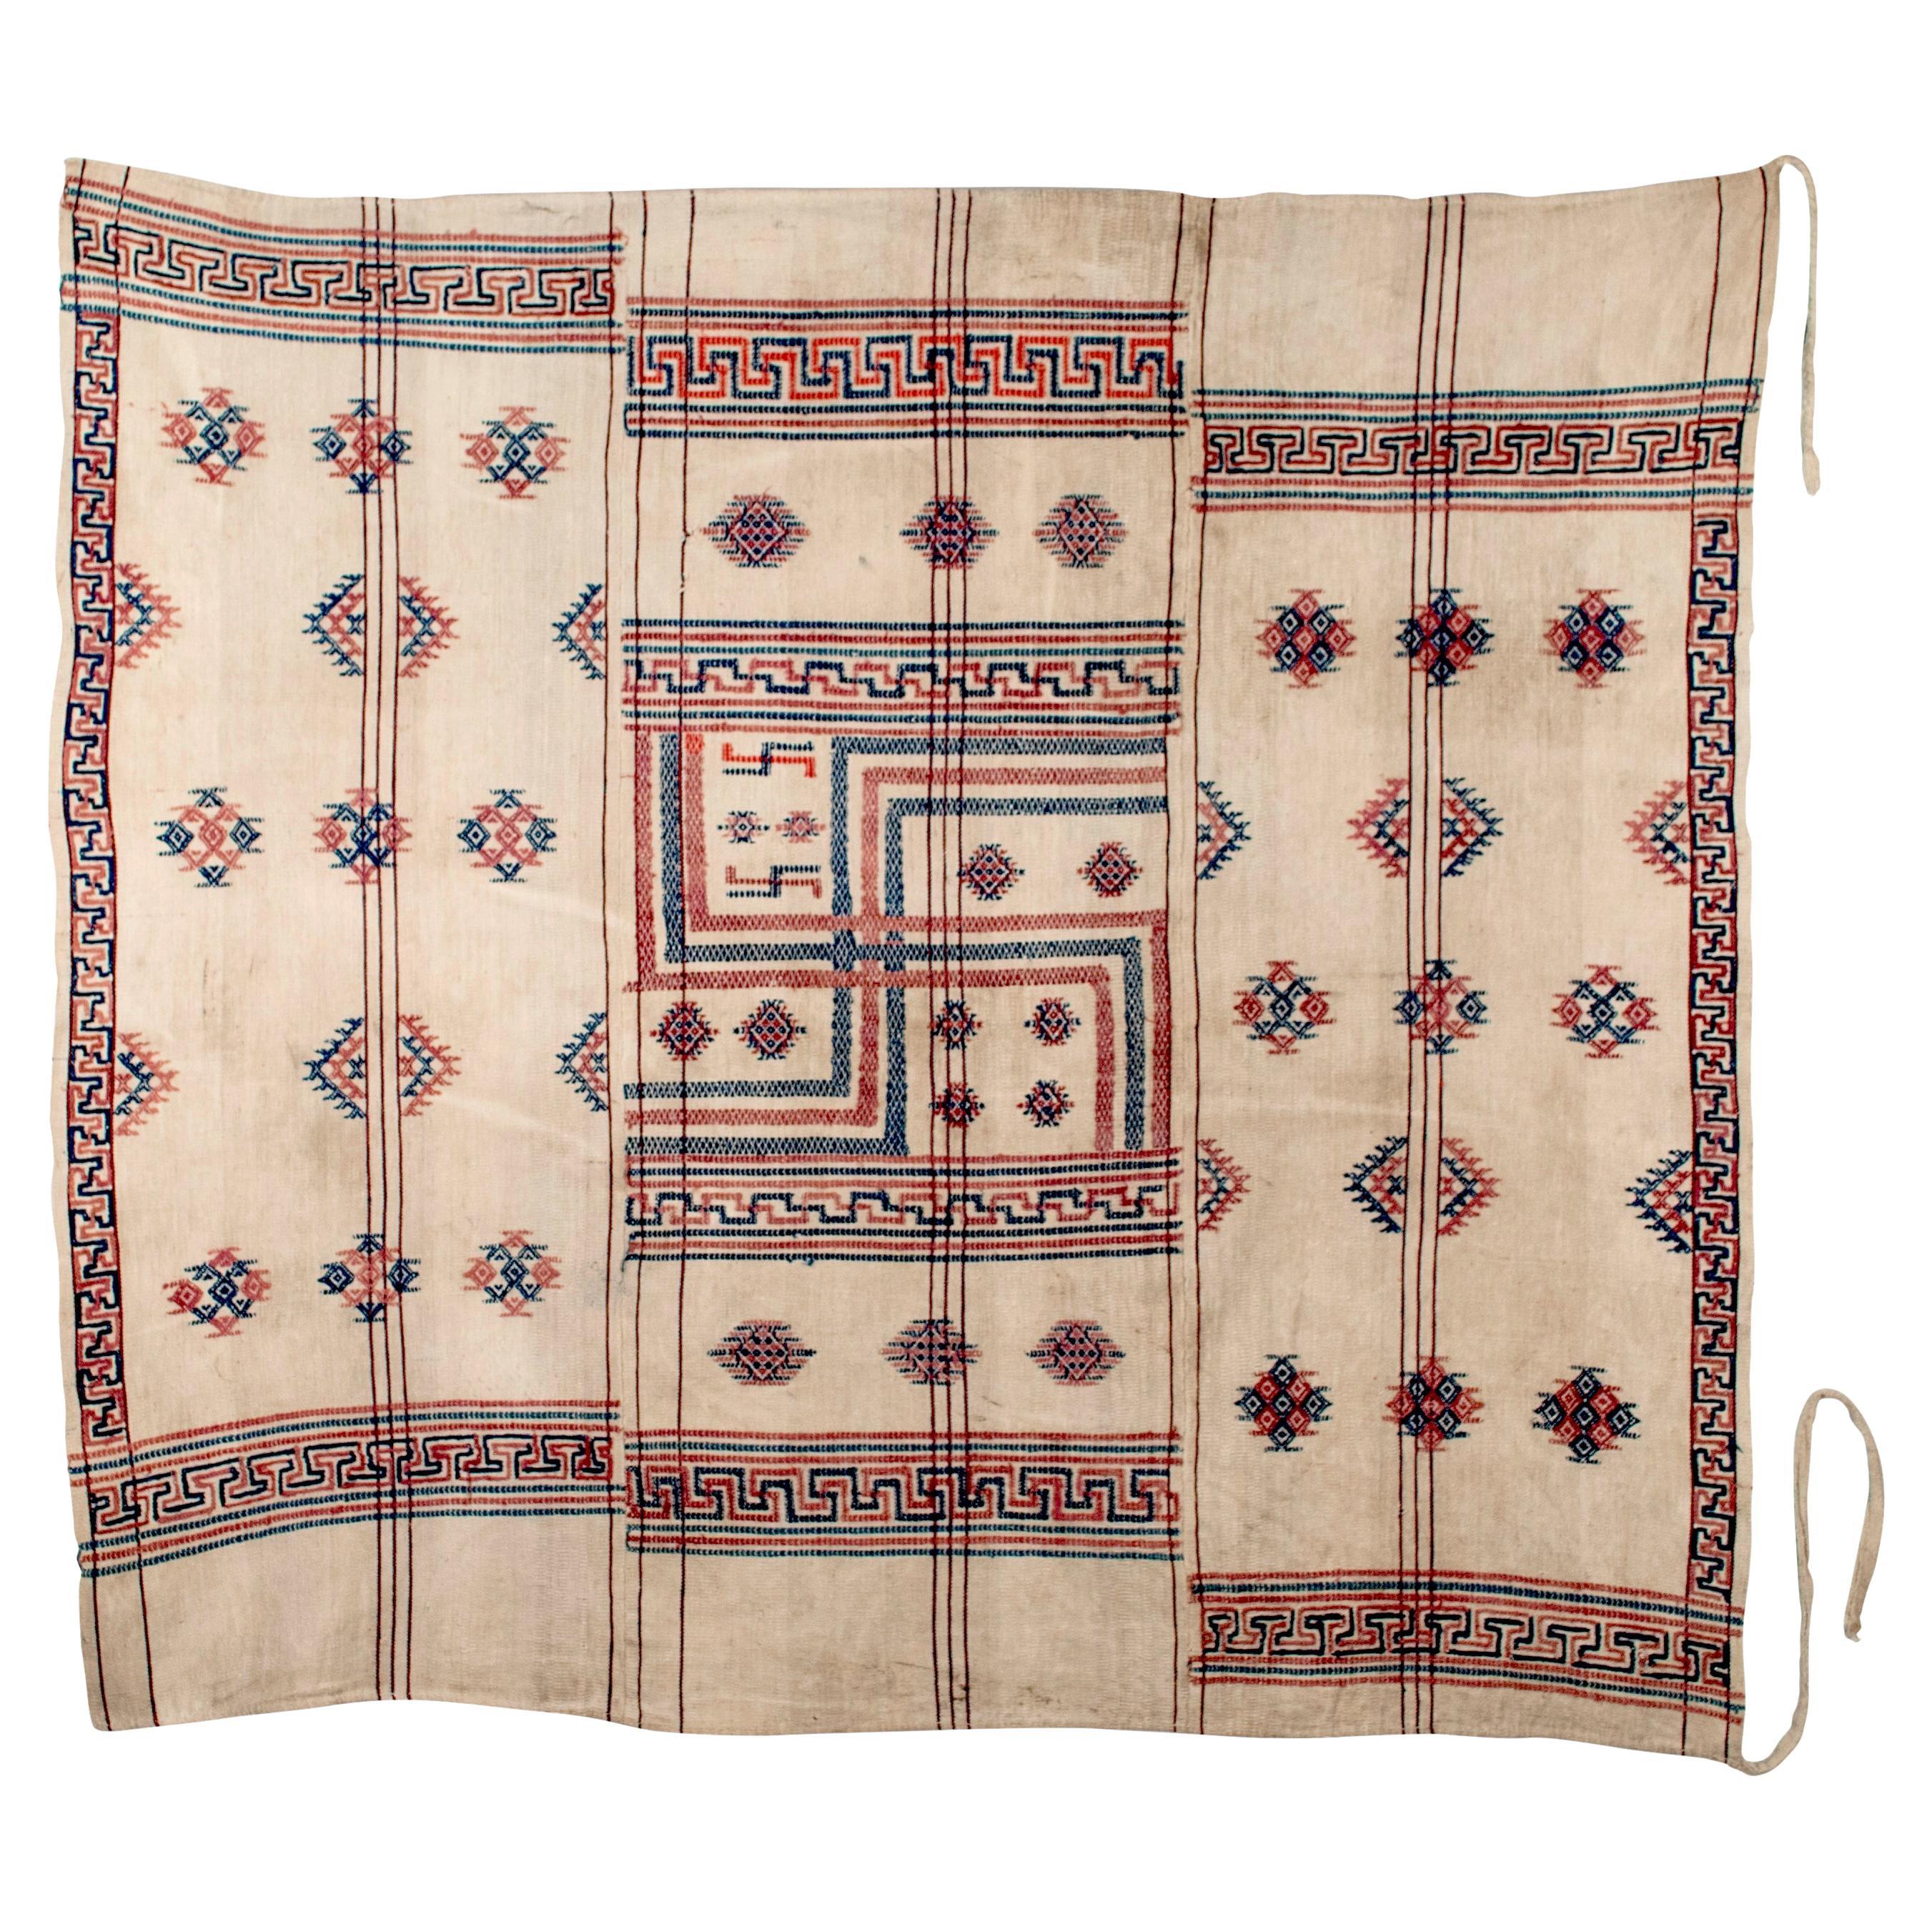 Early 20th Century Bhutanese Wrapping Cloth / Bhundi